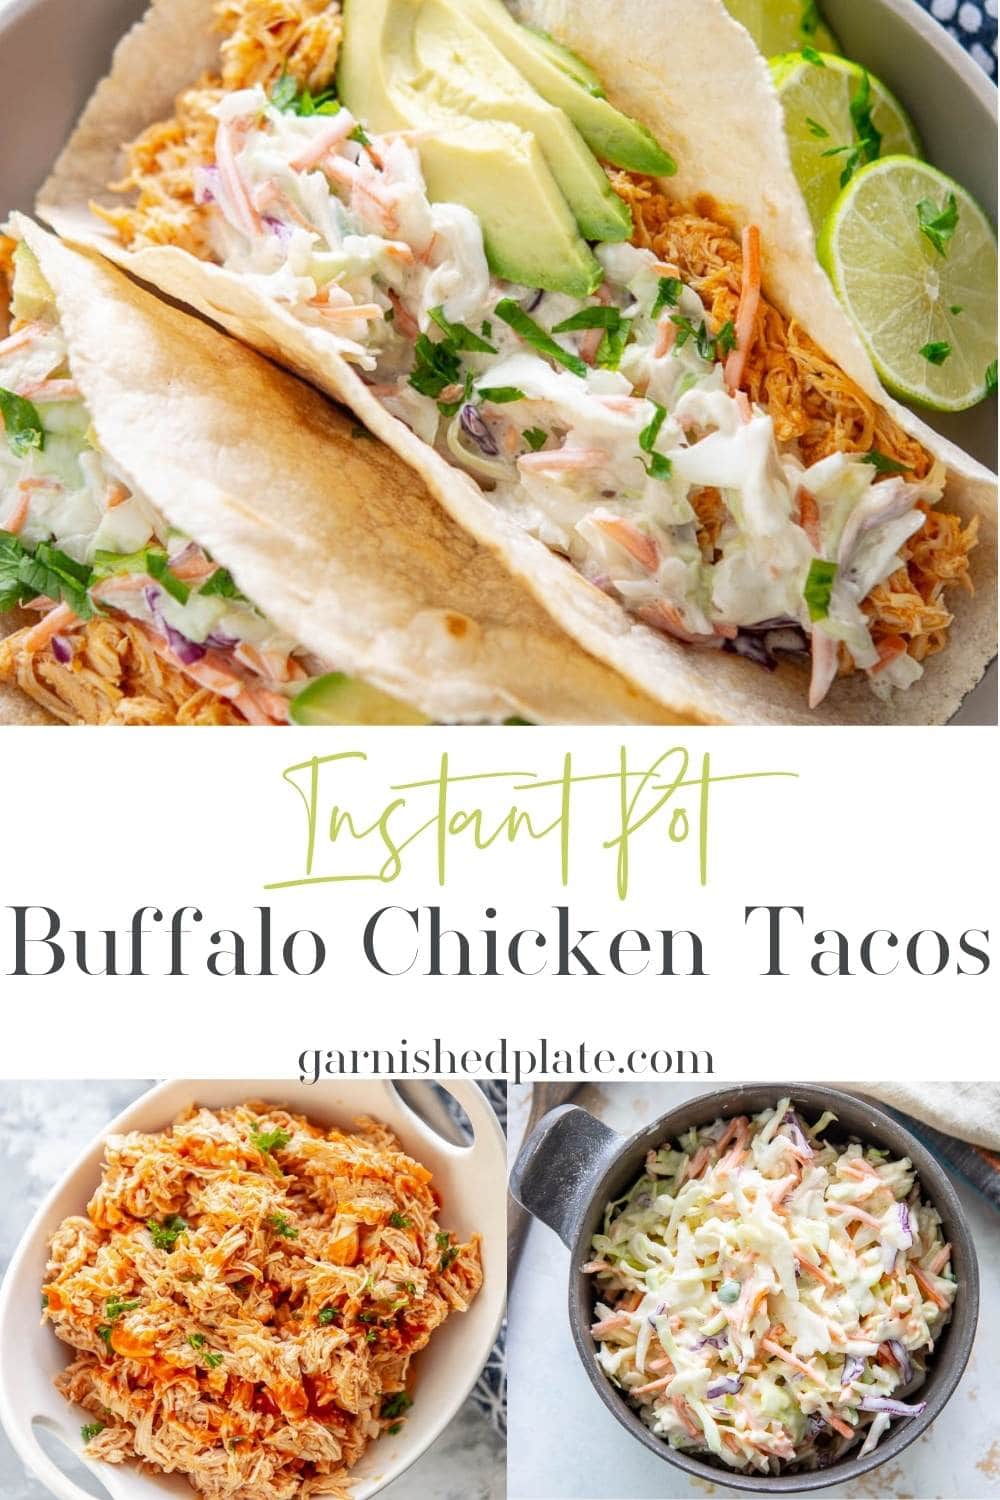 Buffalo Chicken Tacos - Garnished Plate